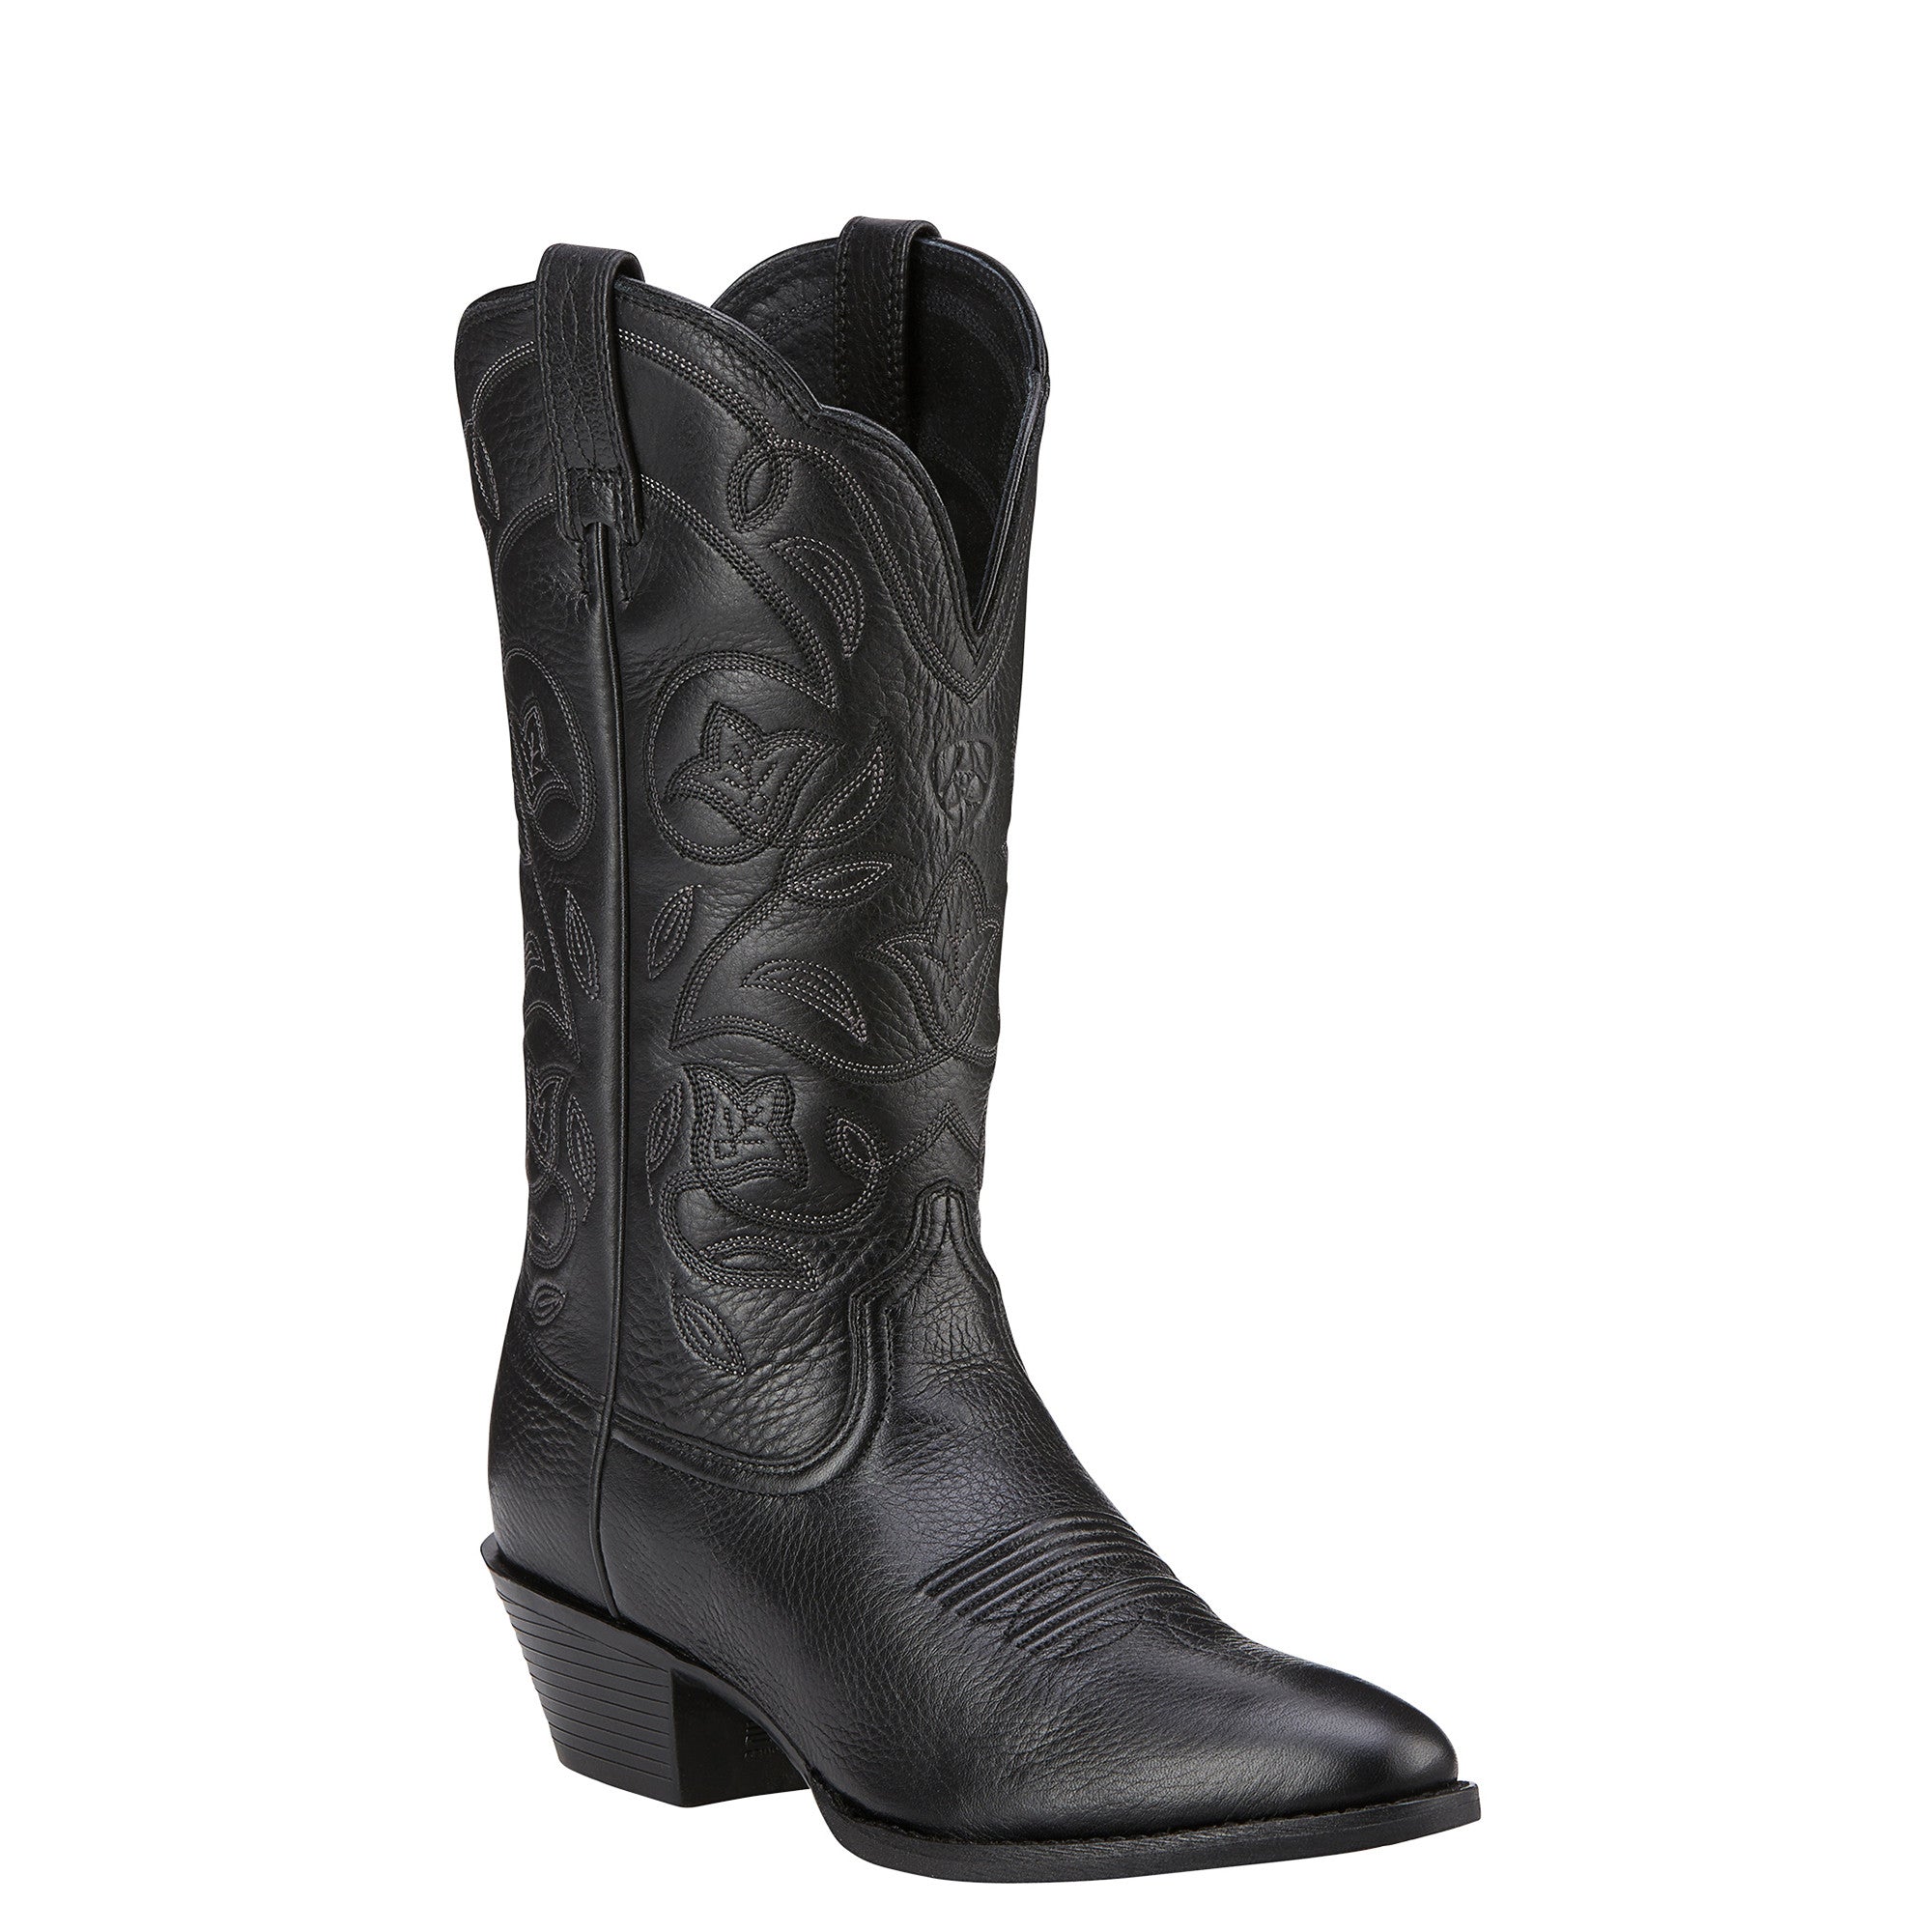 Ariat Women's Heritage Western R Toe Black Cowgirl Boots - VaqueroBoots.com - 1